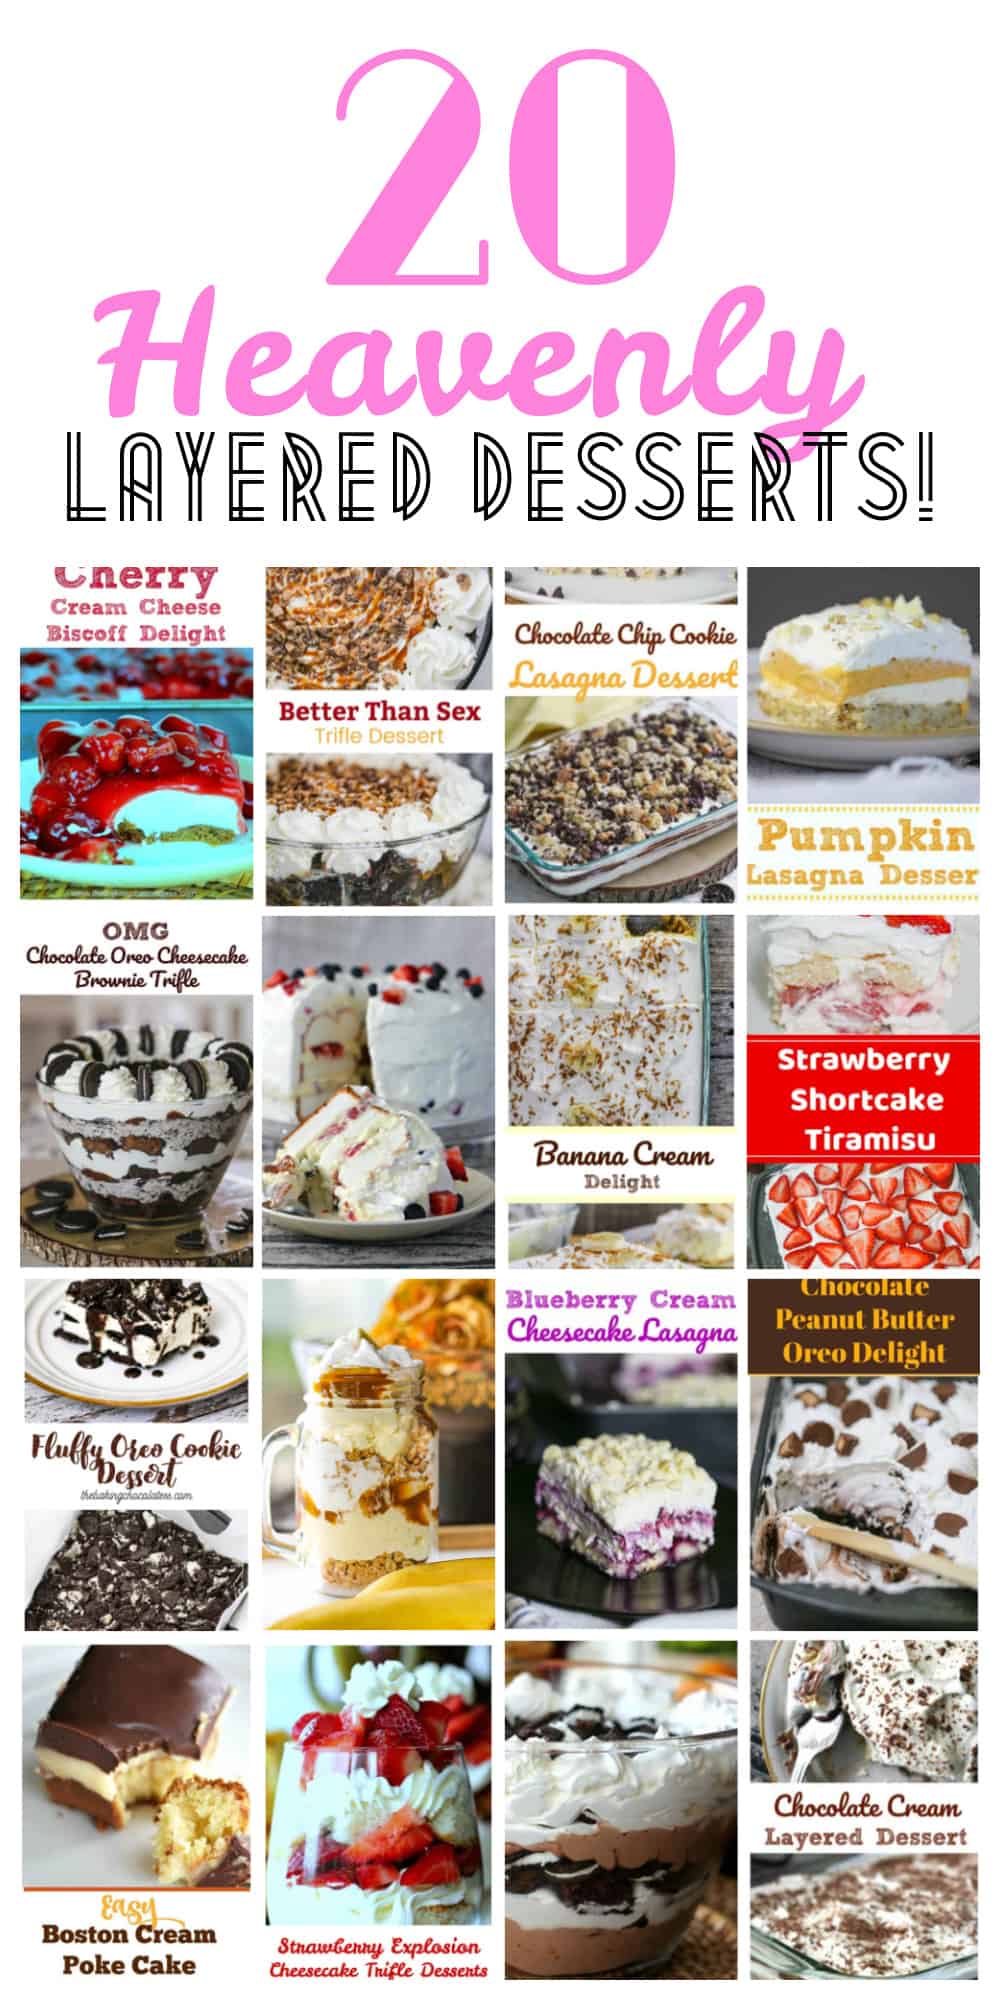 20 Heavenly Layered Desserts!